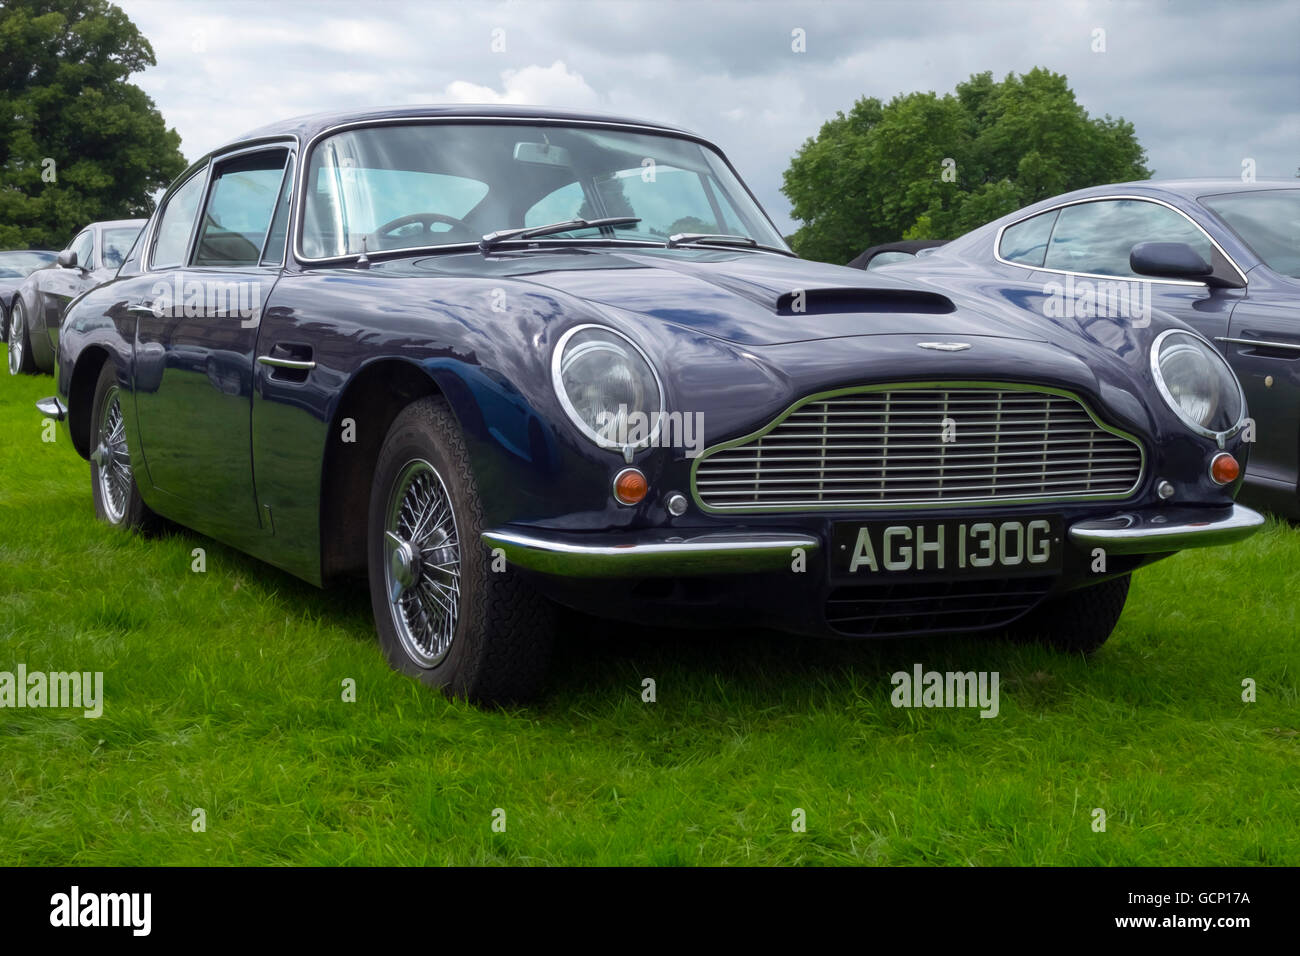 Classic Aston Martin Car Stock Photo